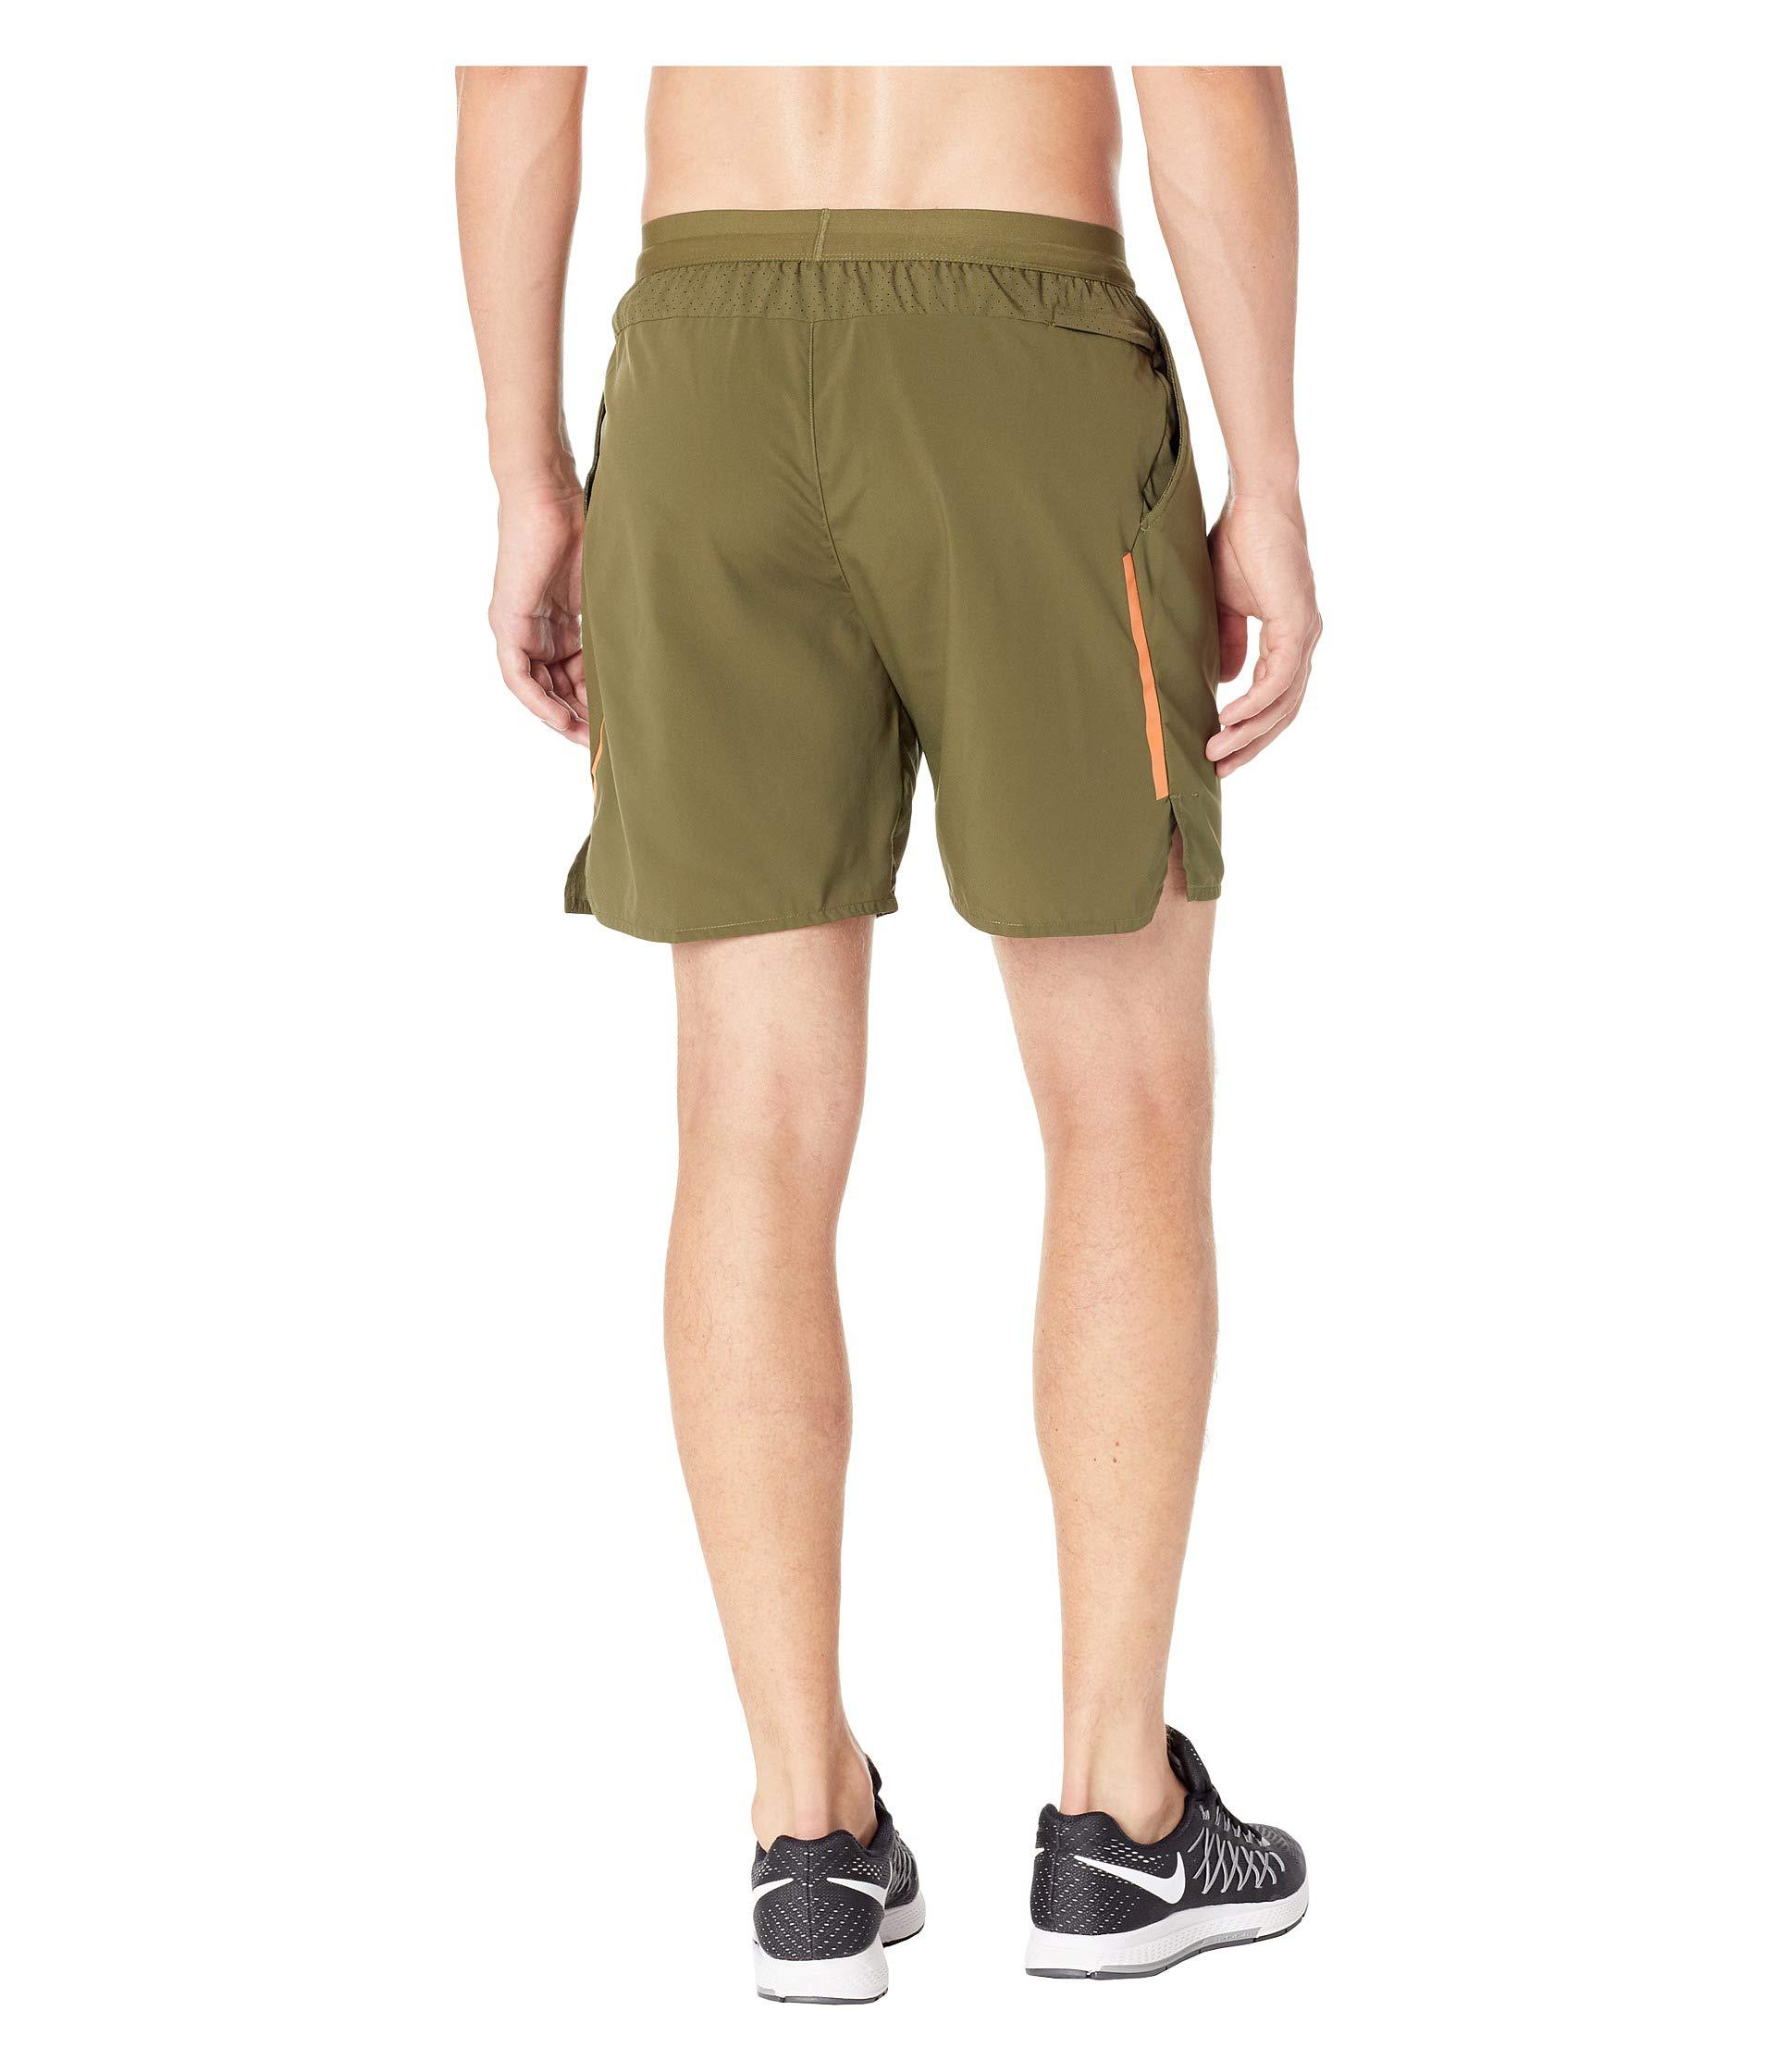 nike army green shorts